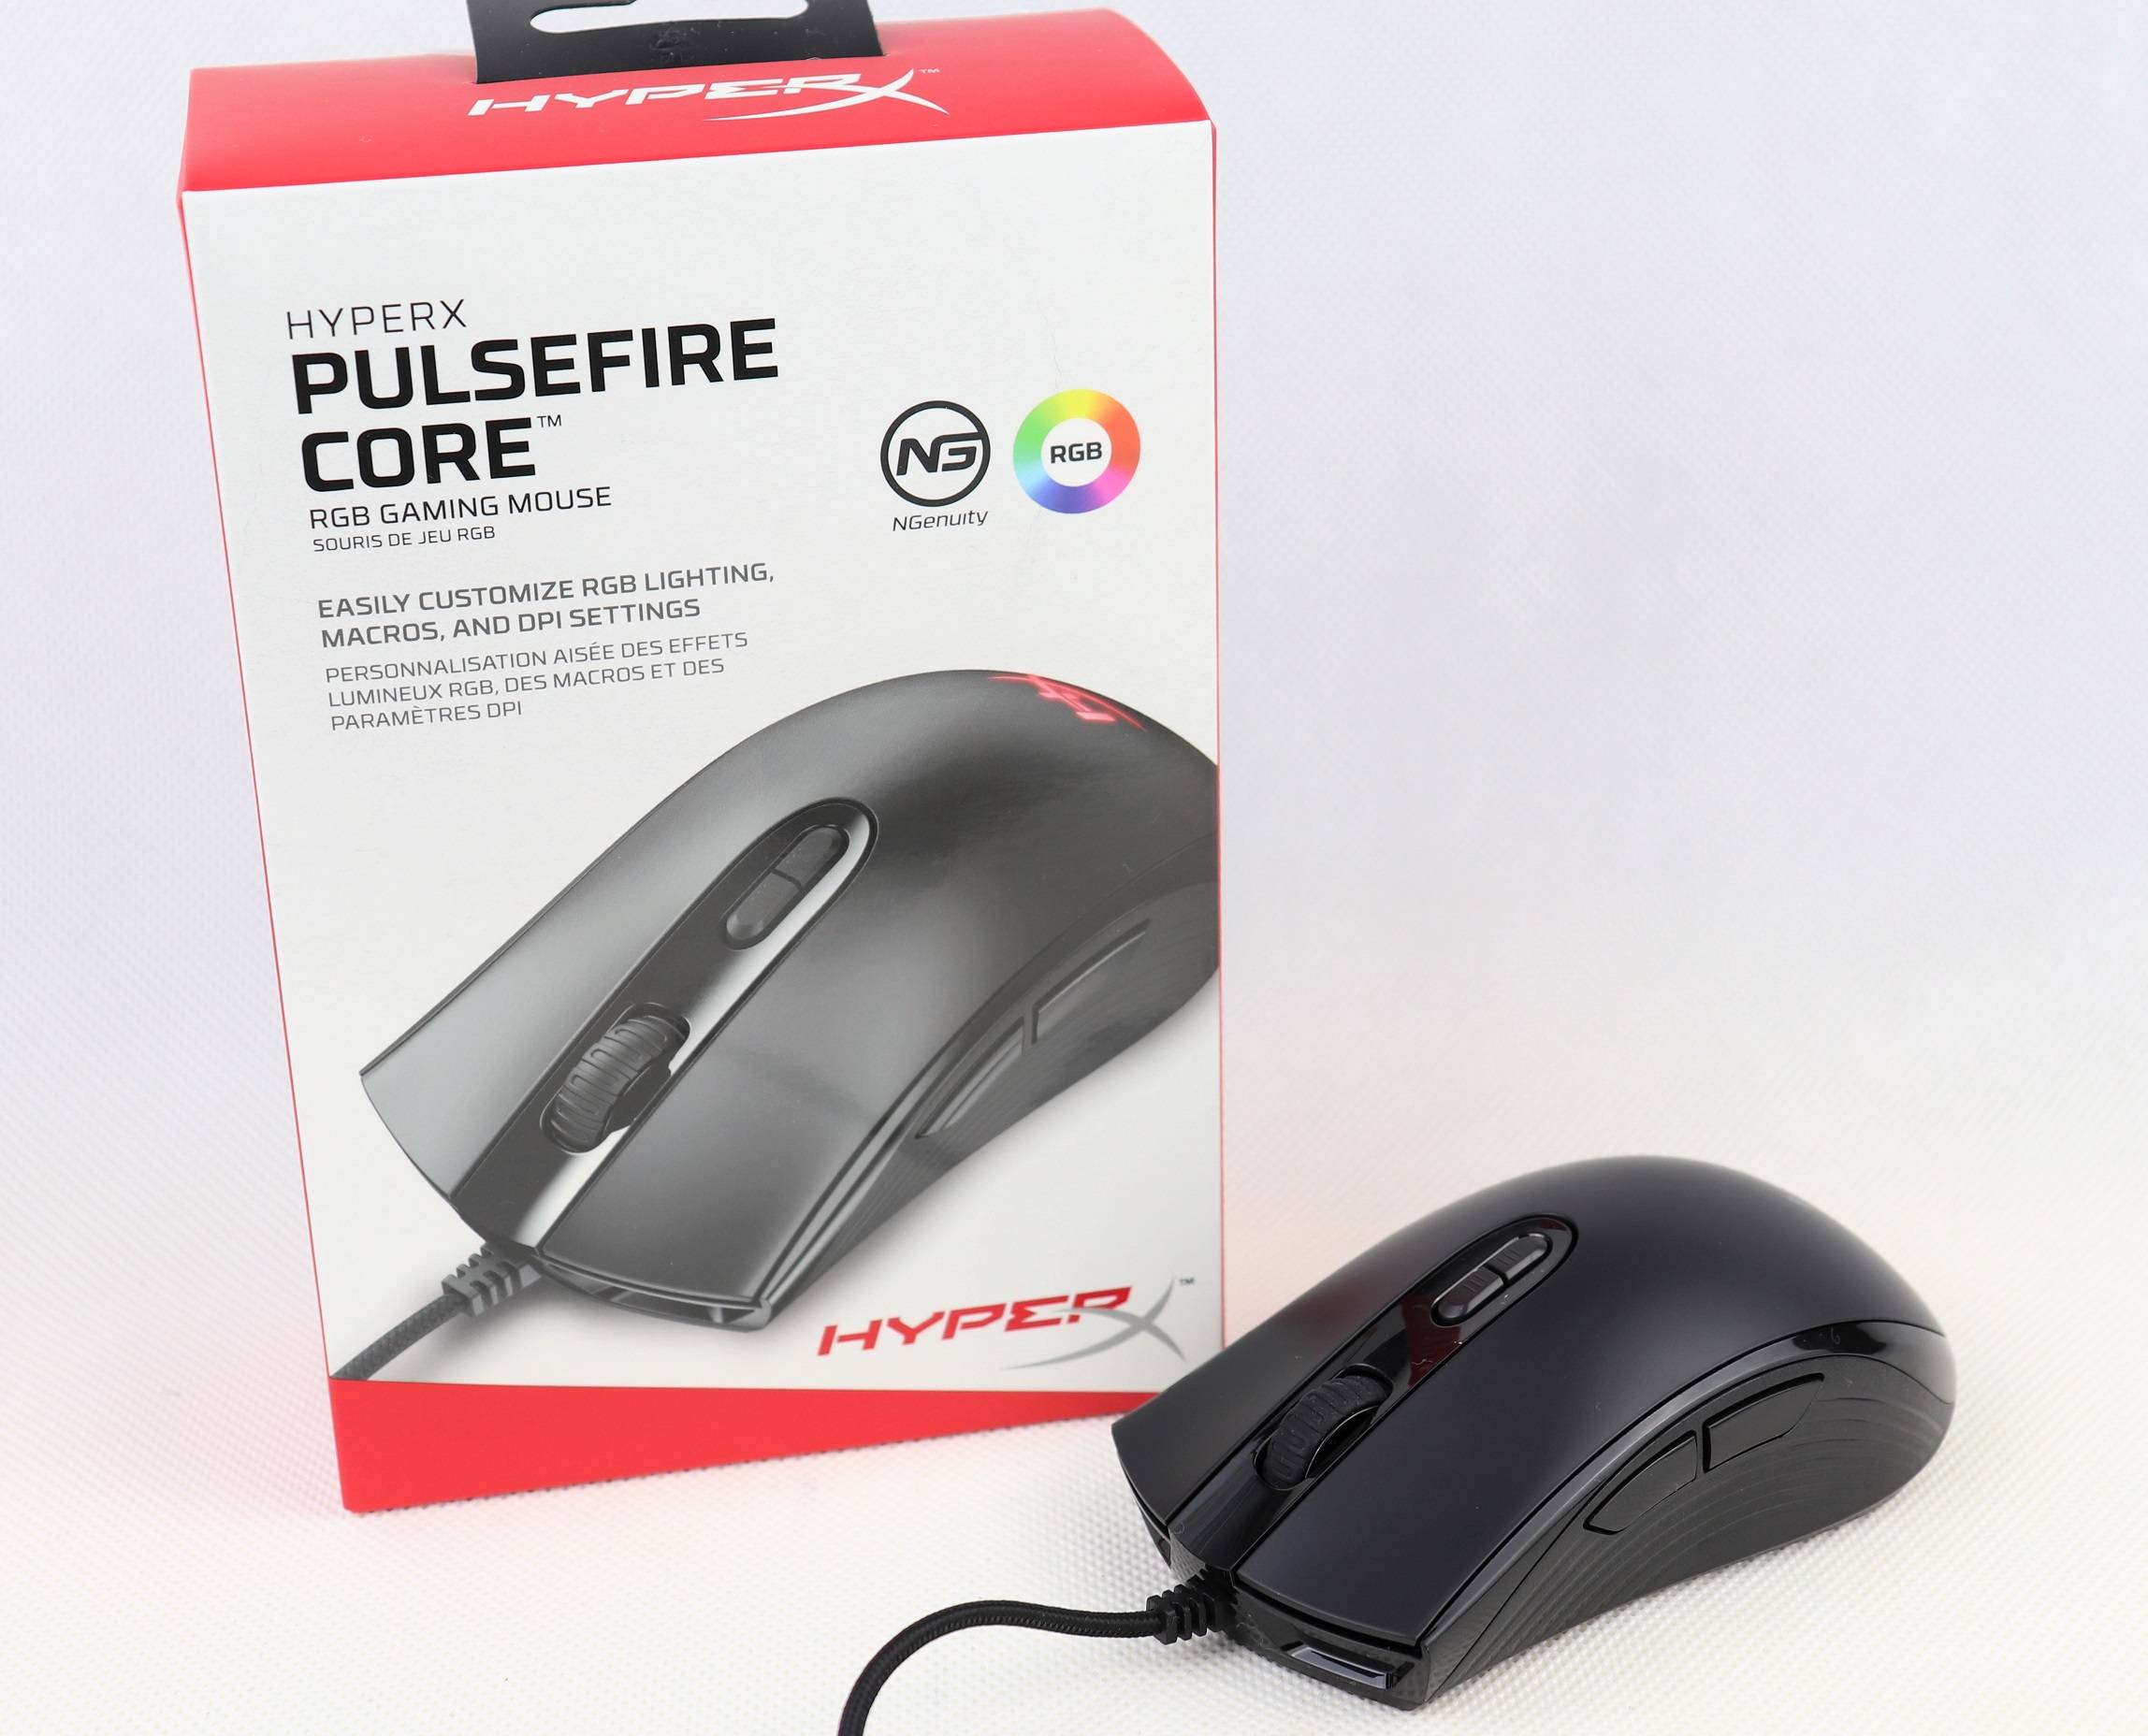 GENUINE Kingston HyperX Pulsefire Core RGB Gaming Mouse 6200dpi NGenuity 